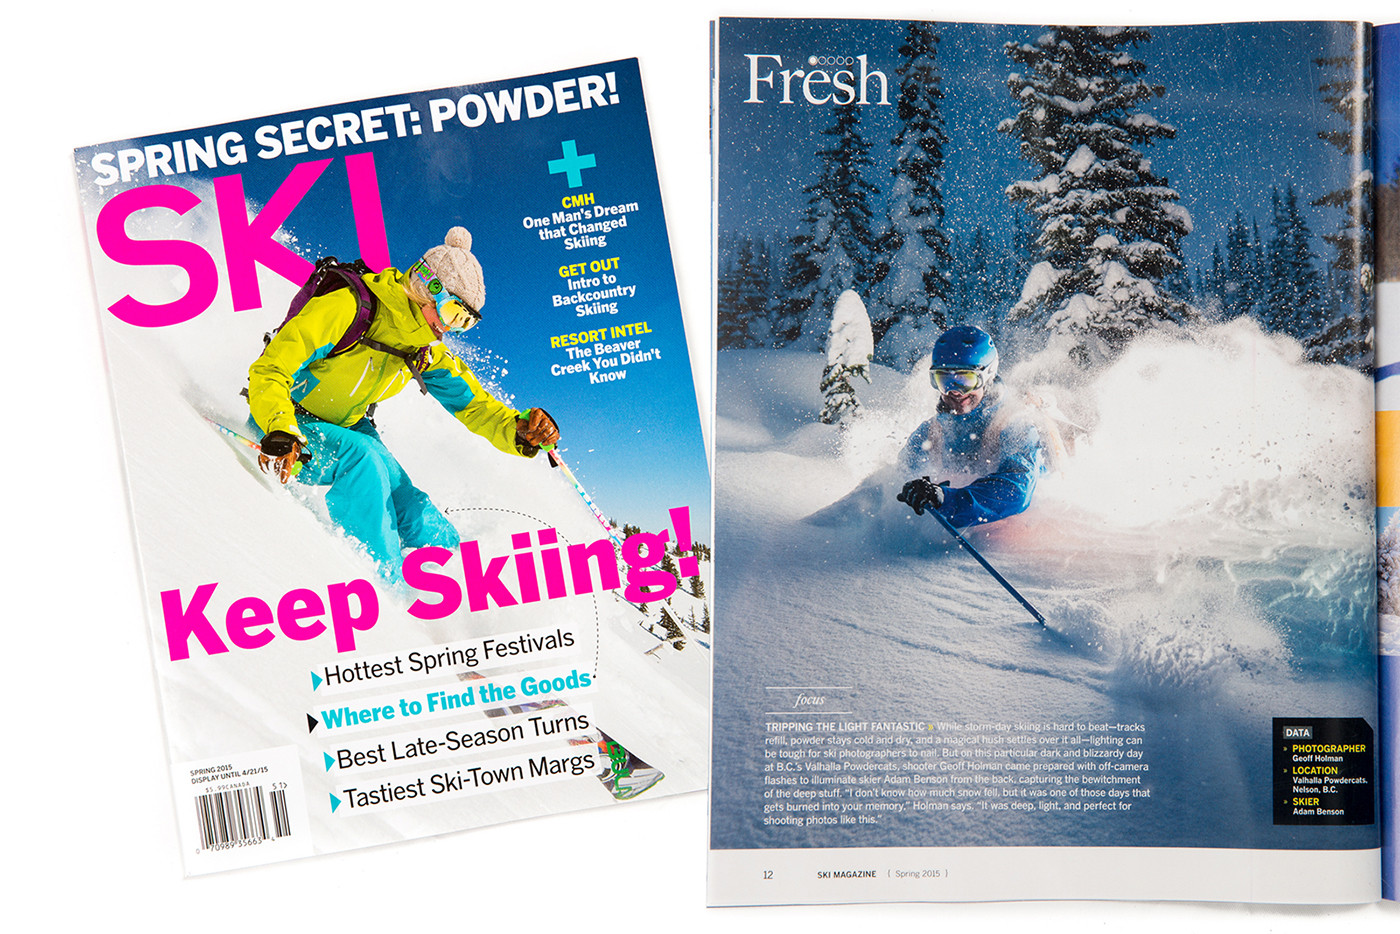 A Full Page Full of Powder in SKI Magazine!